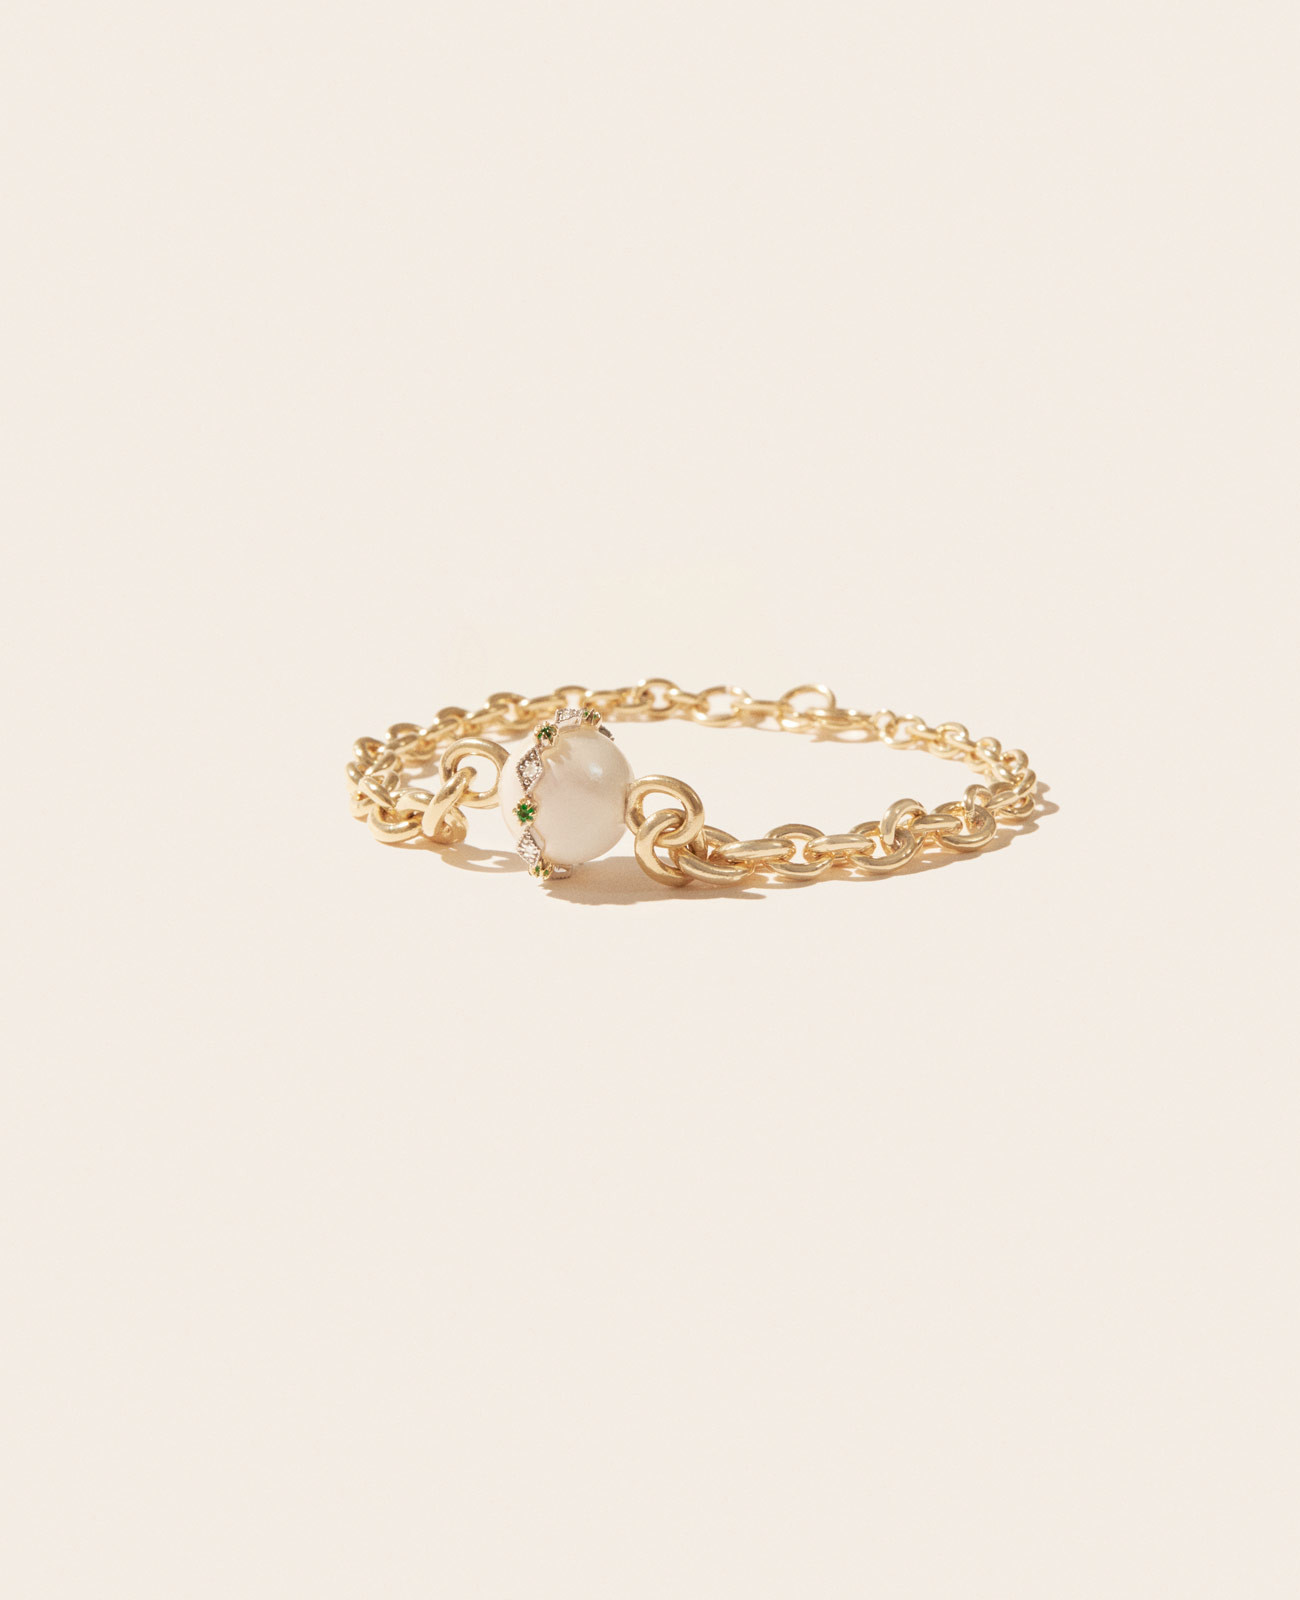 CHELSEA N°3 bracelet pascale monvoisin jewelry paris